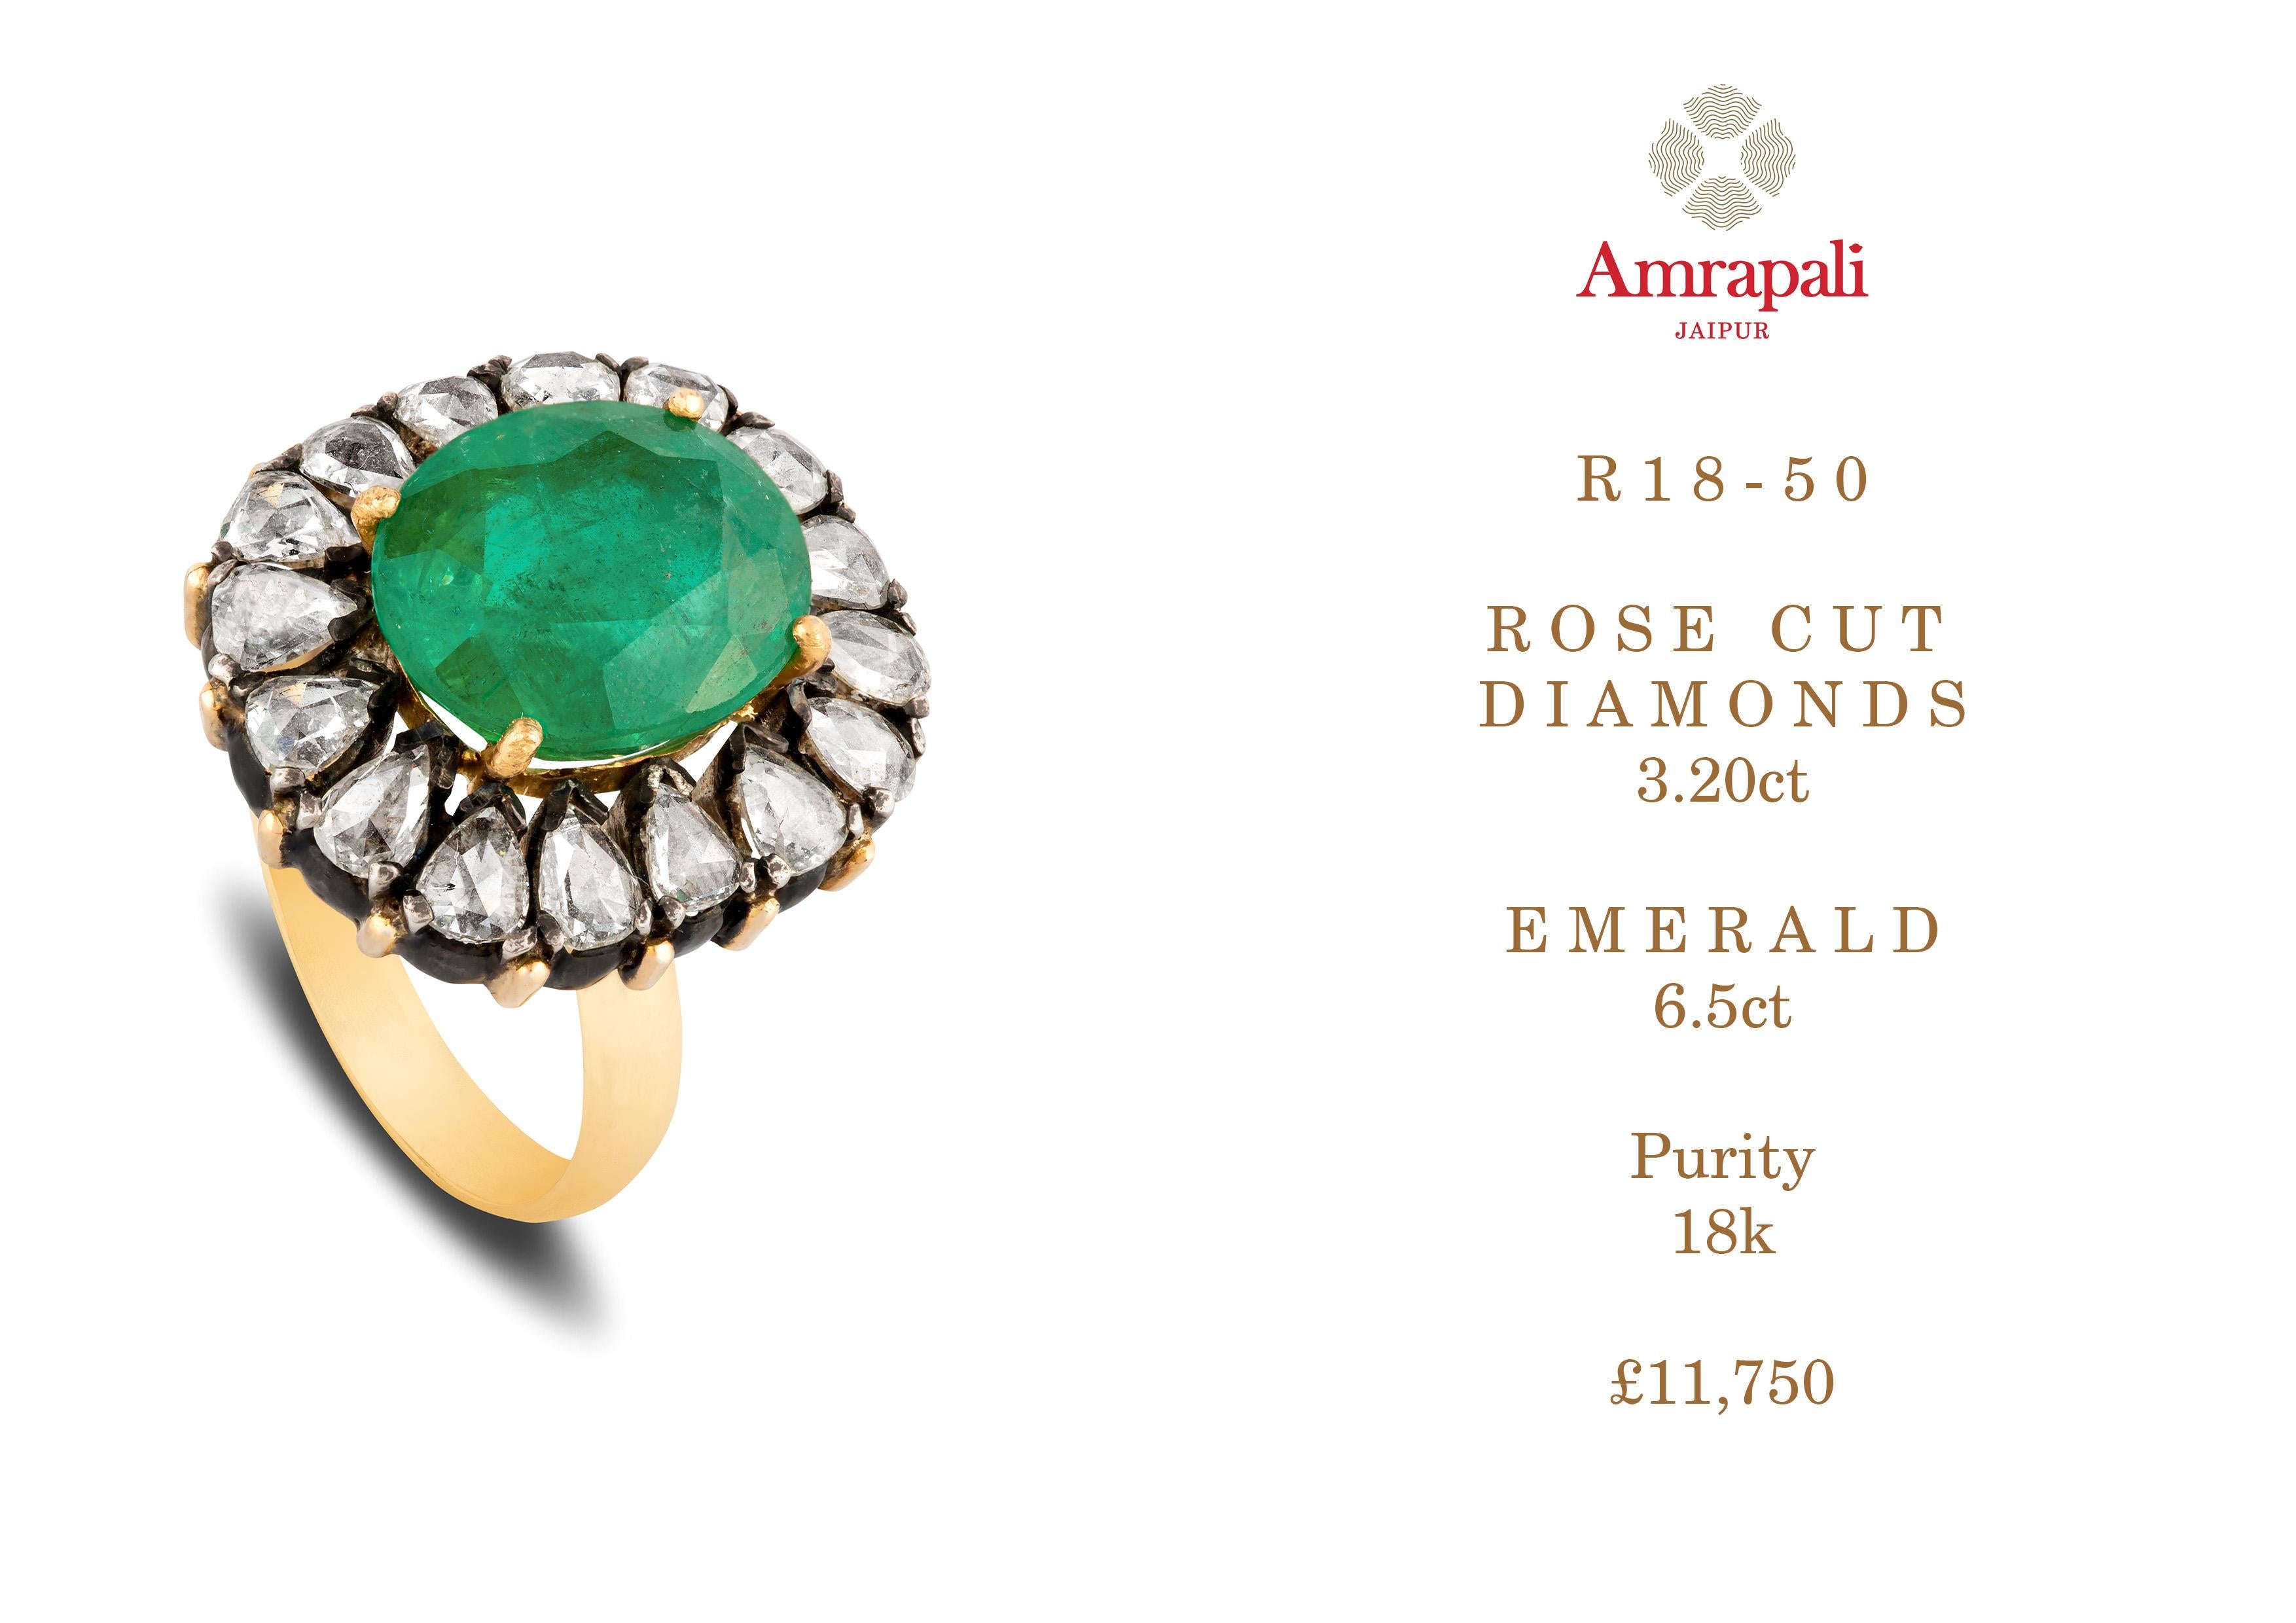 Amrapali Jewels 18 Karat Gold and 925 Sterling Silver, Emerald & Diamond Ring

Emerald weight - 6.50ct
Diamond weight - 3.20ct

Ring size - 54
